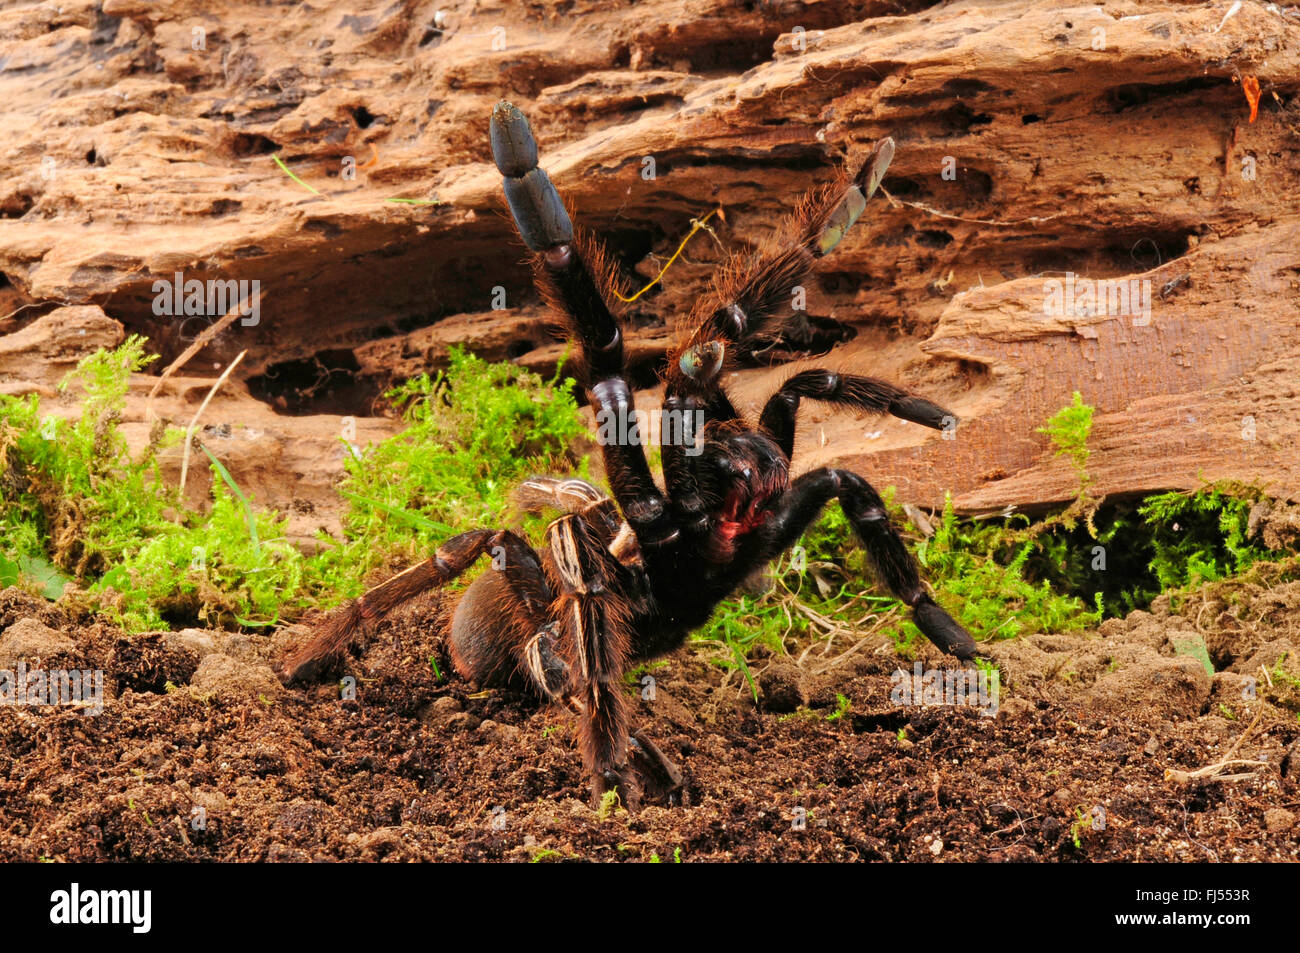 Puppy-Sized Spider Surprises Scientist in Rainforest | Live Science